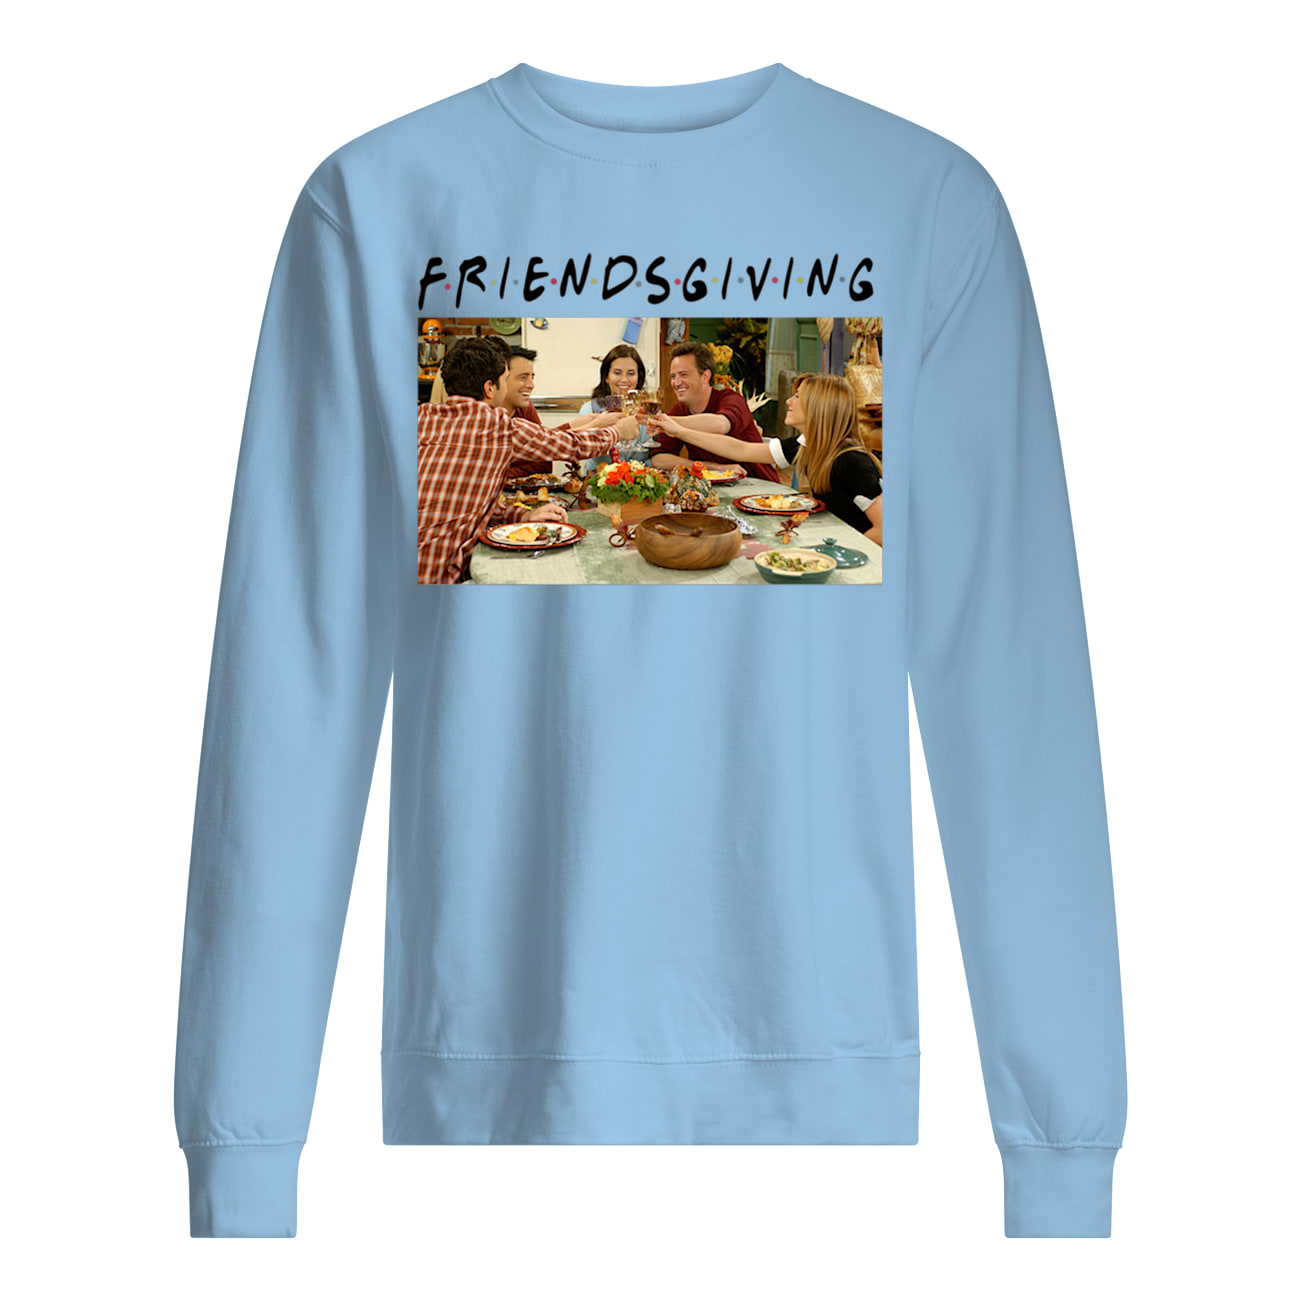 Friendsgiving friends tv show thanksgiving sweatshirt